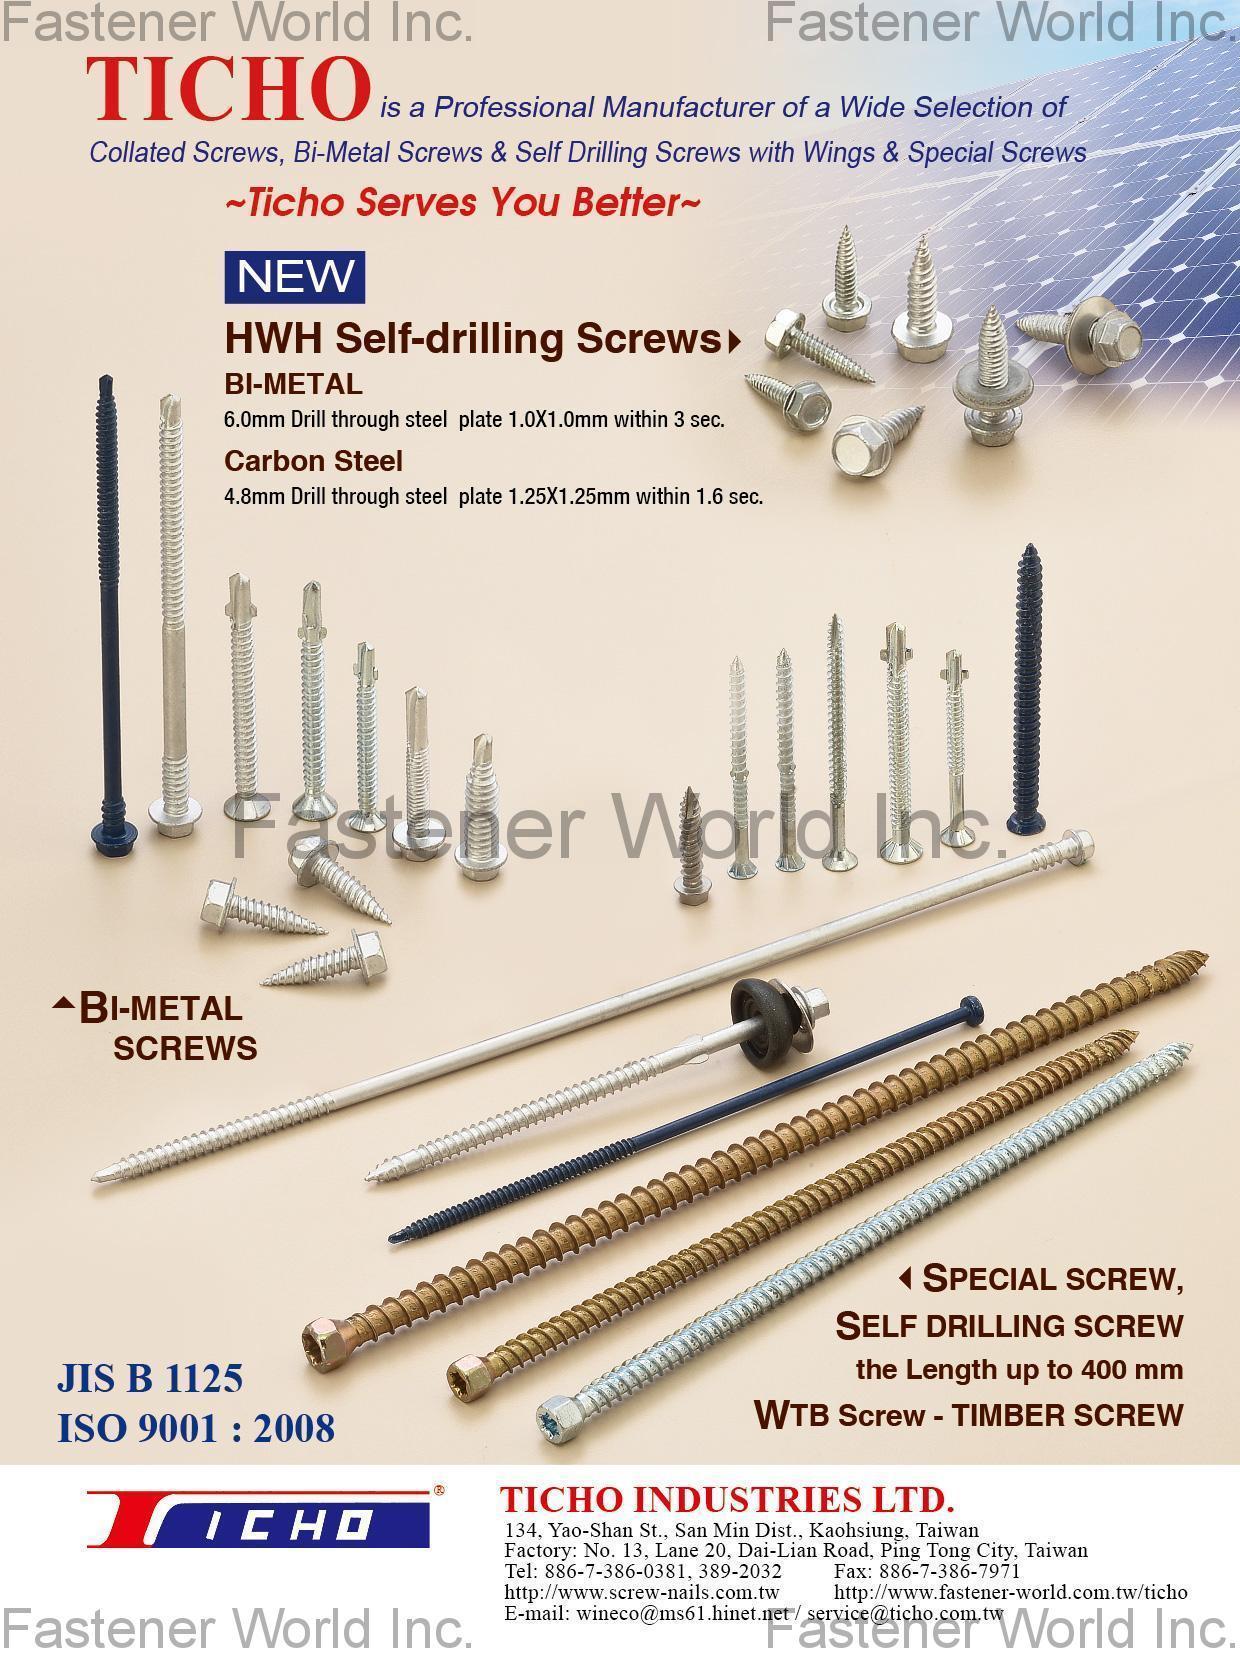 Self-drilling Screws HWH Self-drilling Screws, Bi-Metal Screw, Special Screw, Self-Drilling Screw, WTB Screw-Timber Screw